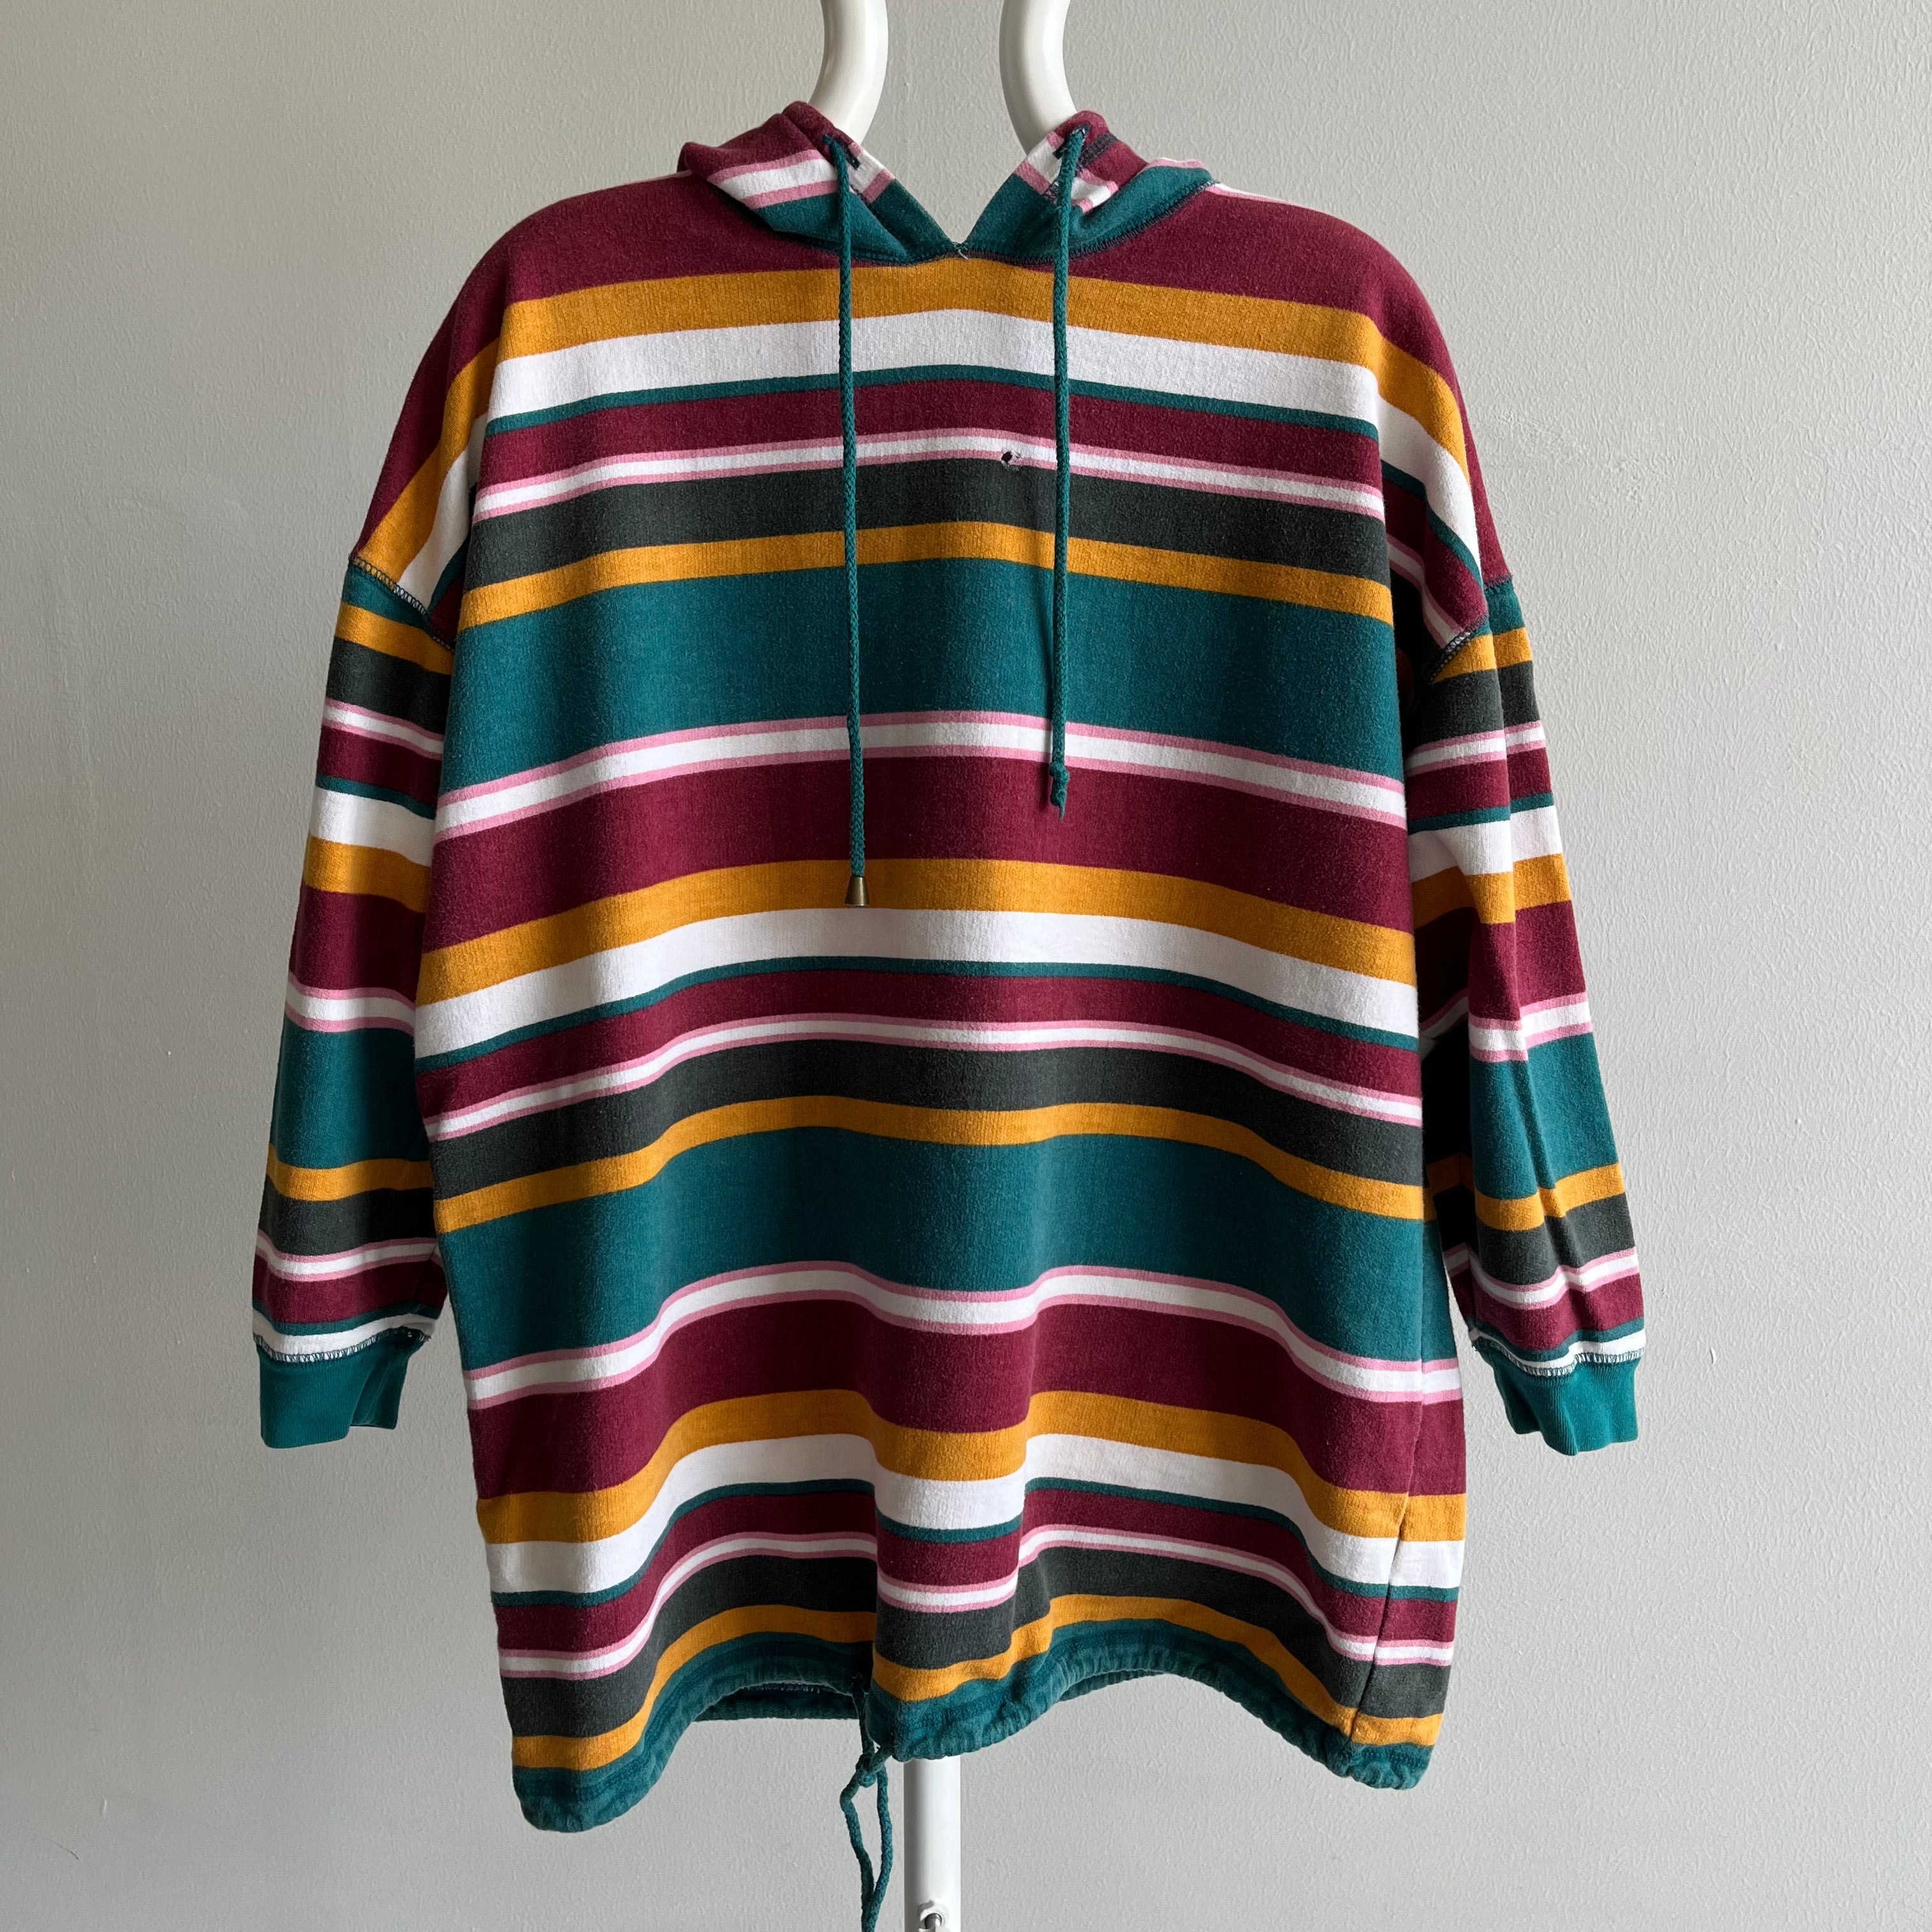 1990s Ooolala Striped Cotton Sweatshirt/Shirt by Gitano!!!